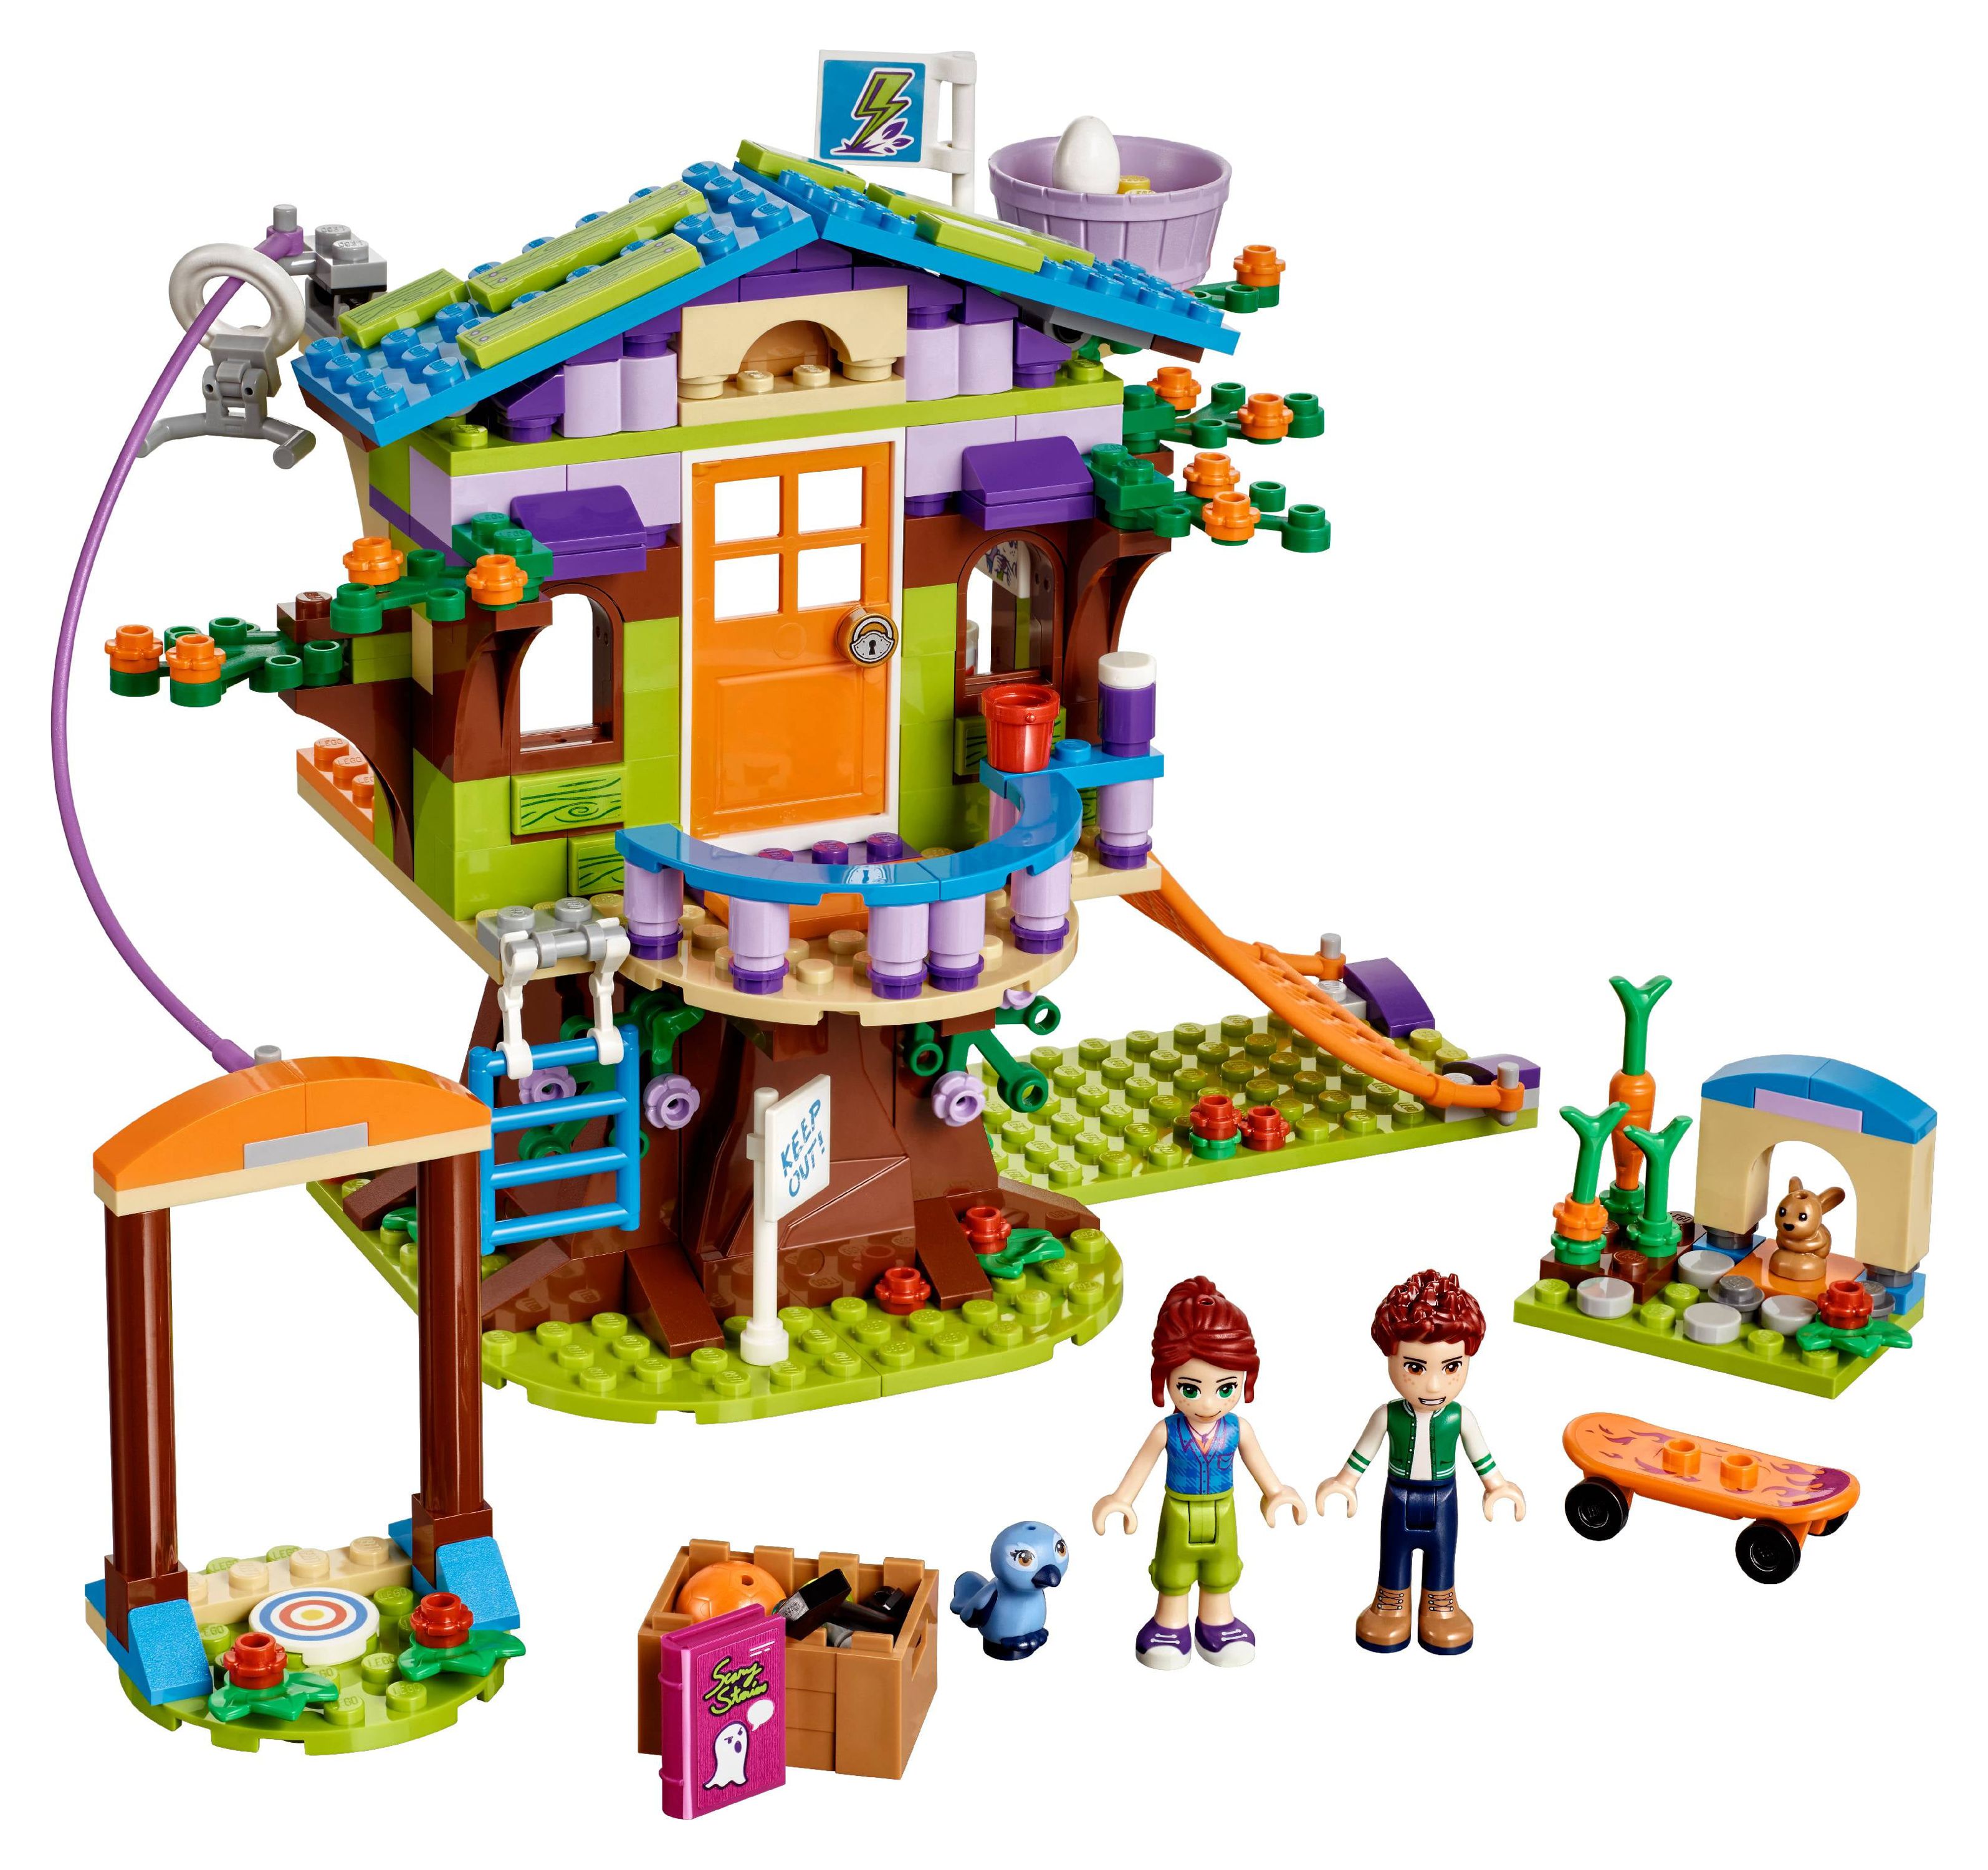 LEGO Friends Mia's Tree House 41335 - image 1 of 5